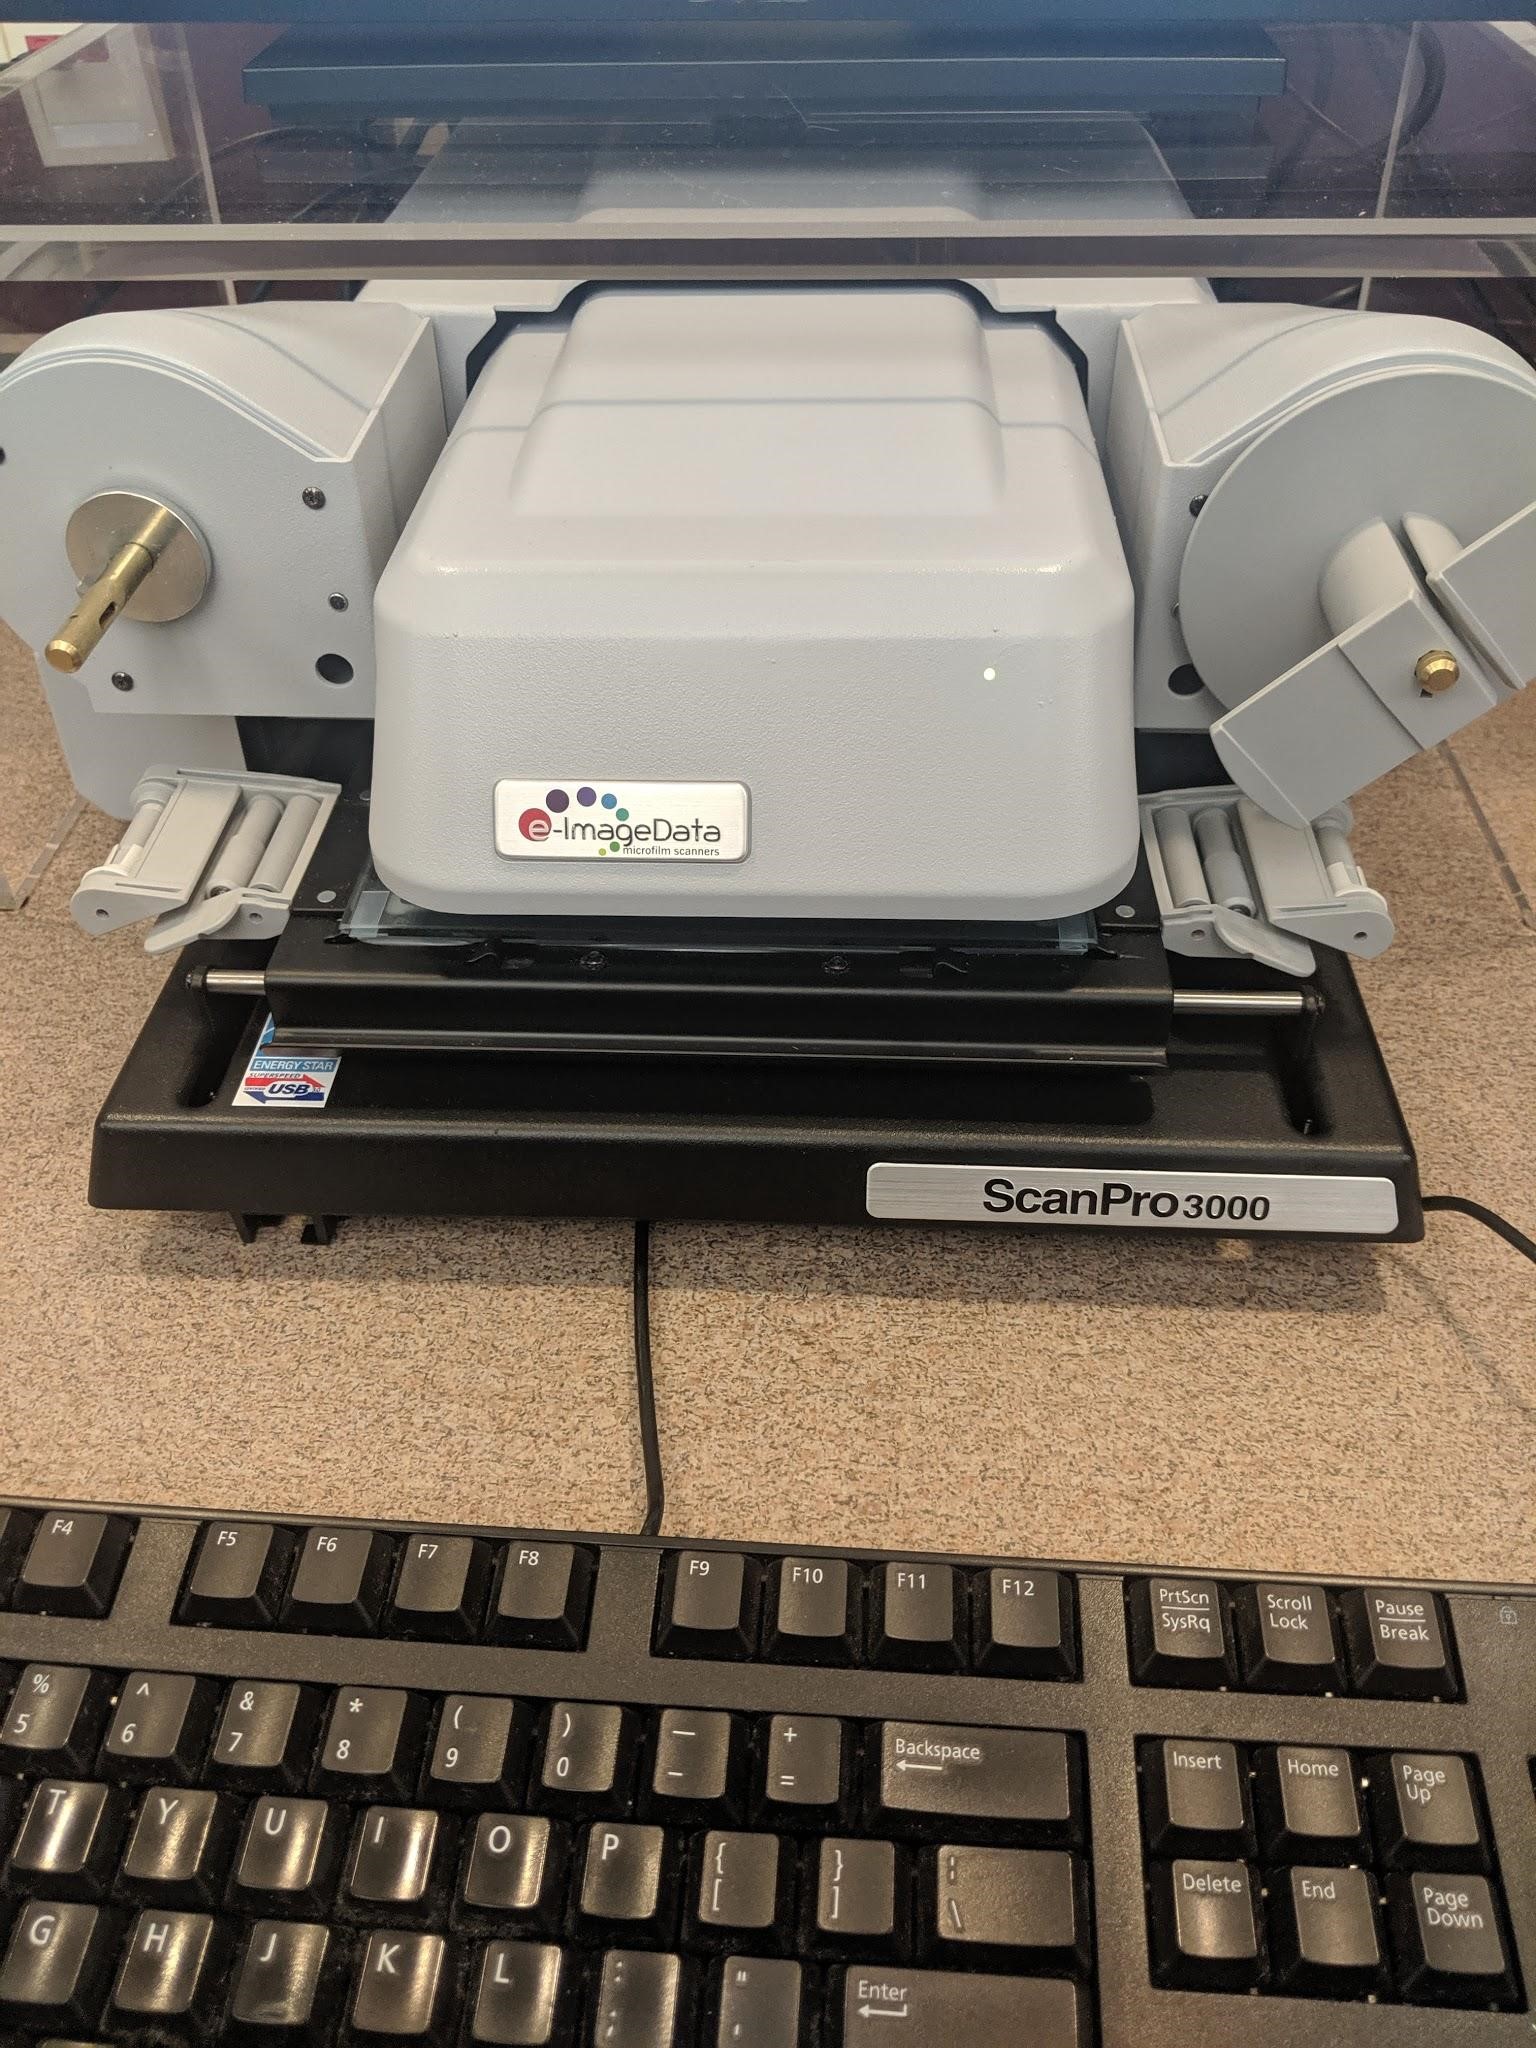 ScanPro3000 microfilm reader/scanner and keyboard